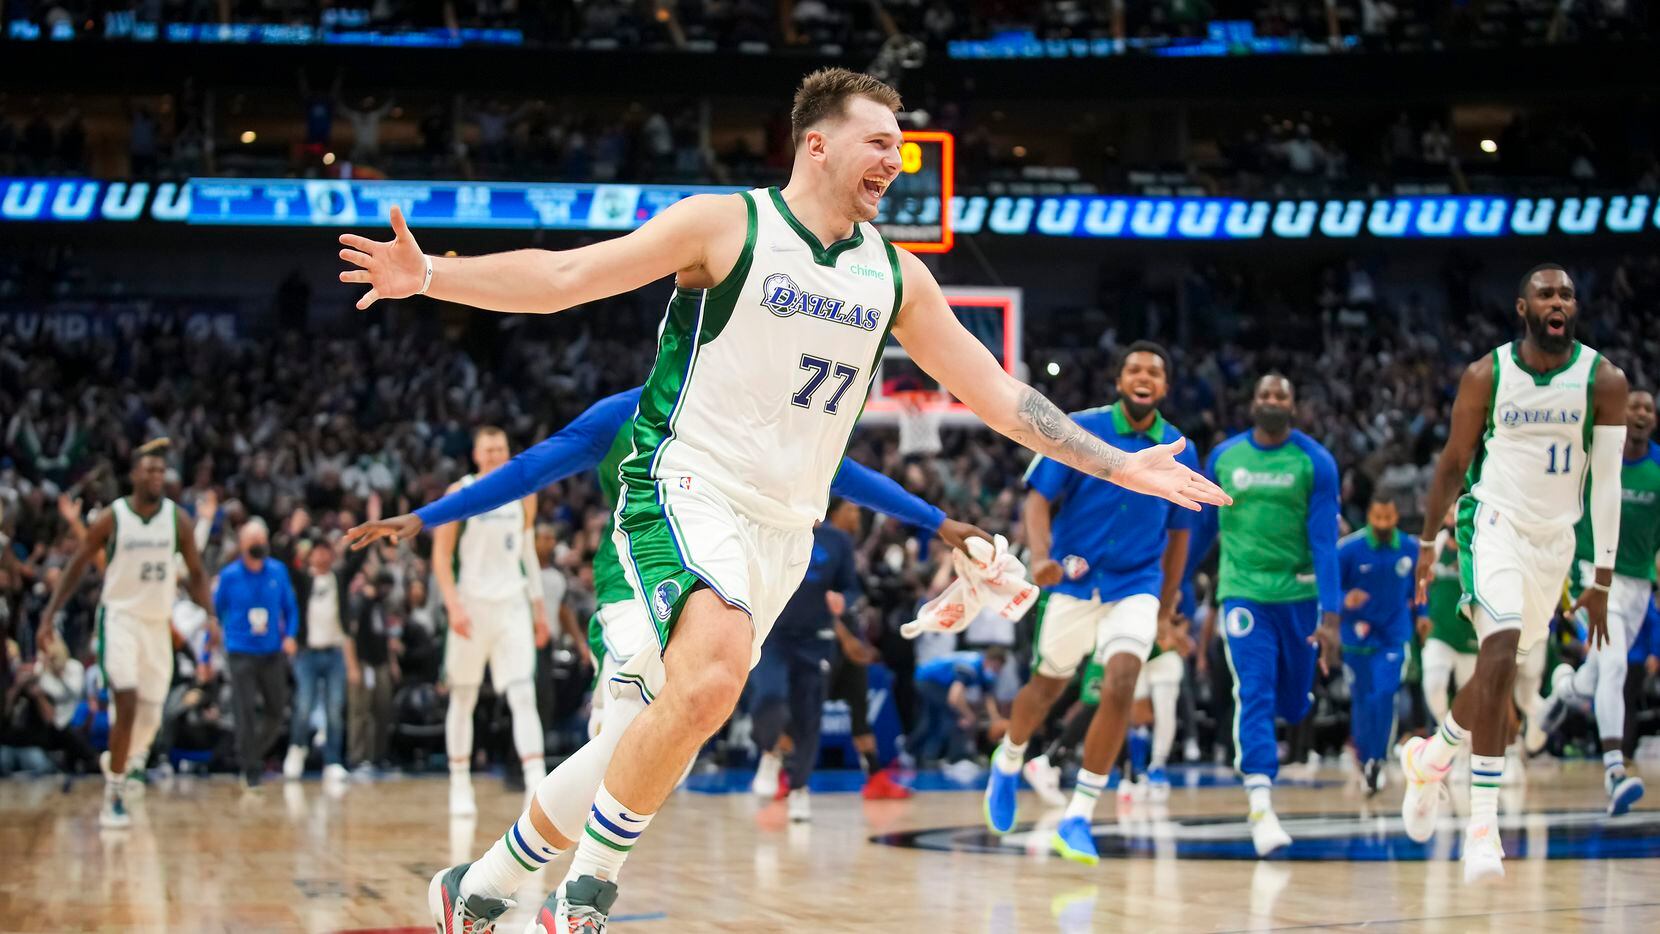 He's so clutch': Luka Doncic's magical buzzer-beater lifts Mavericks over  Celtics